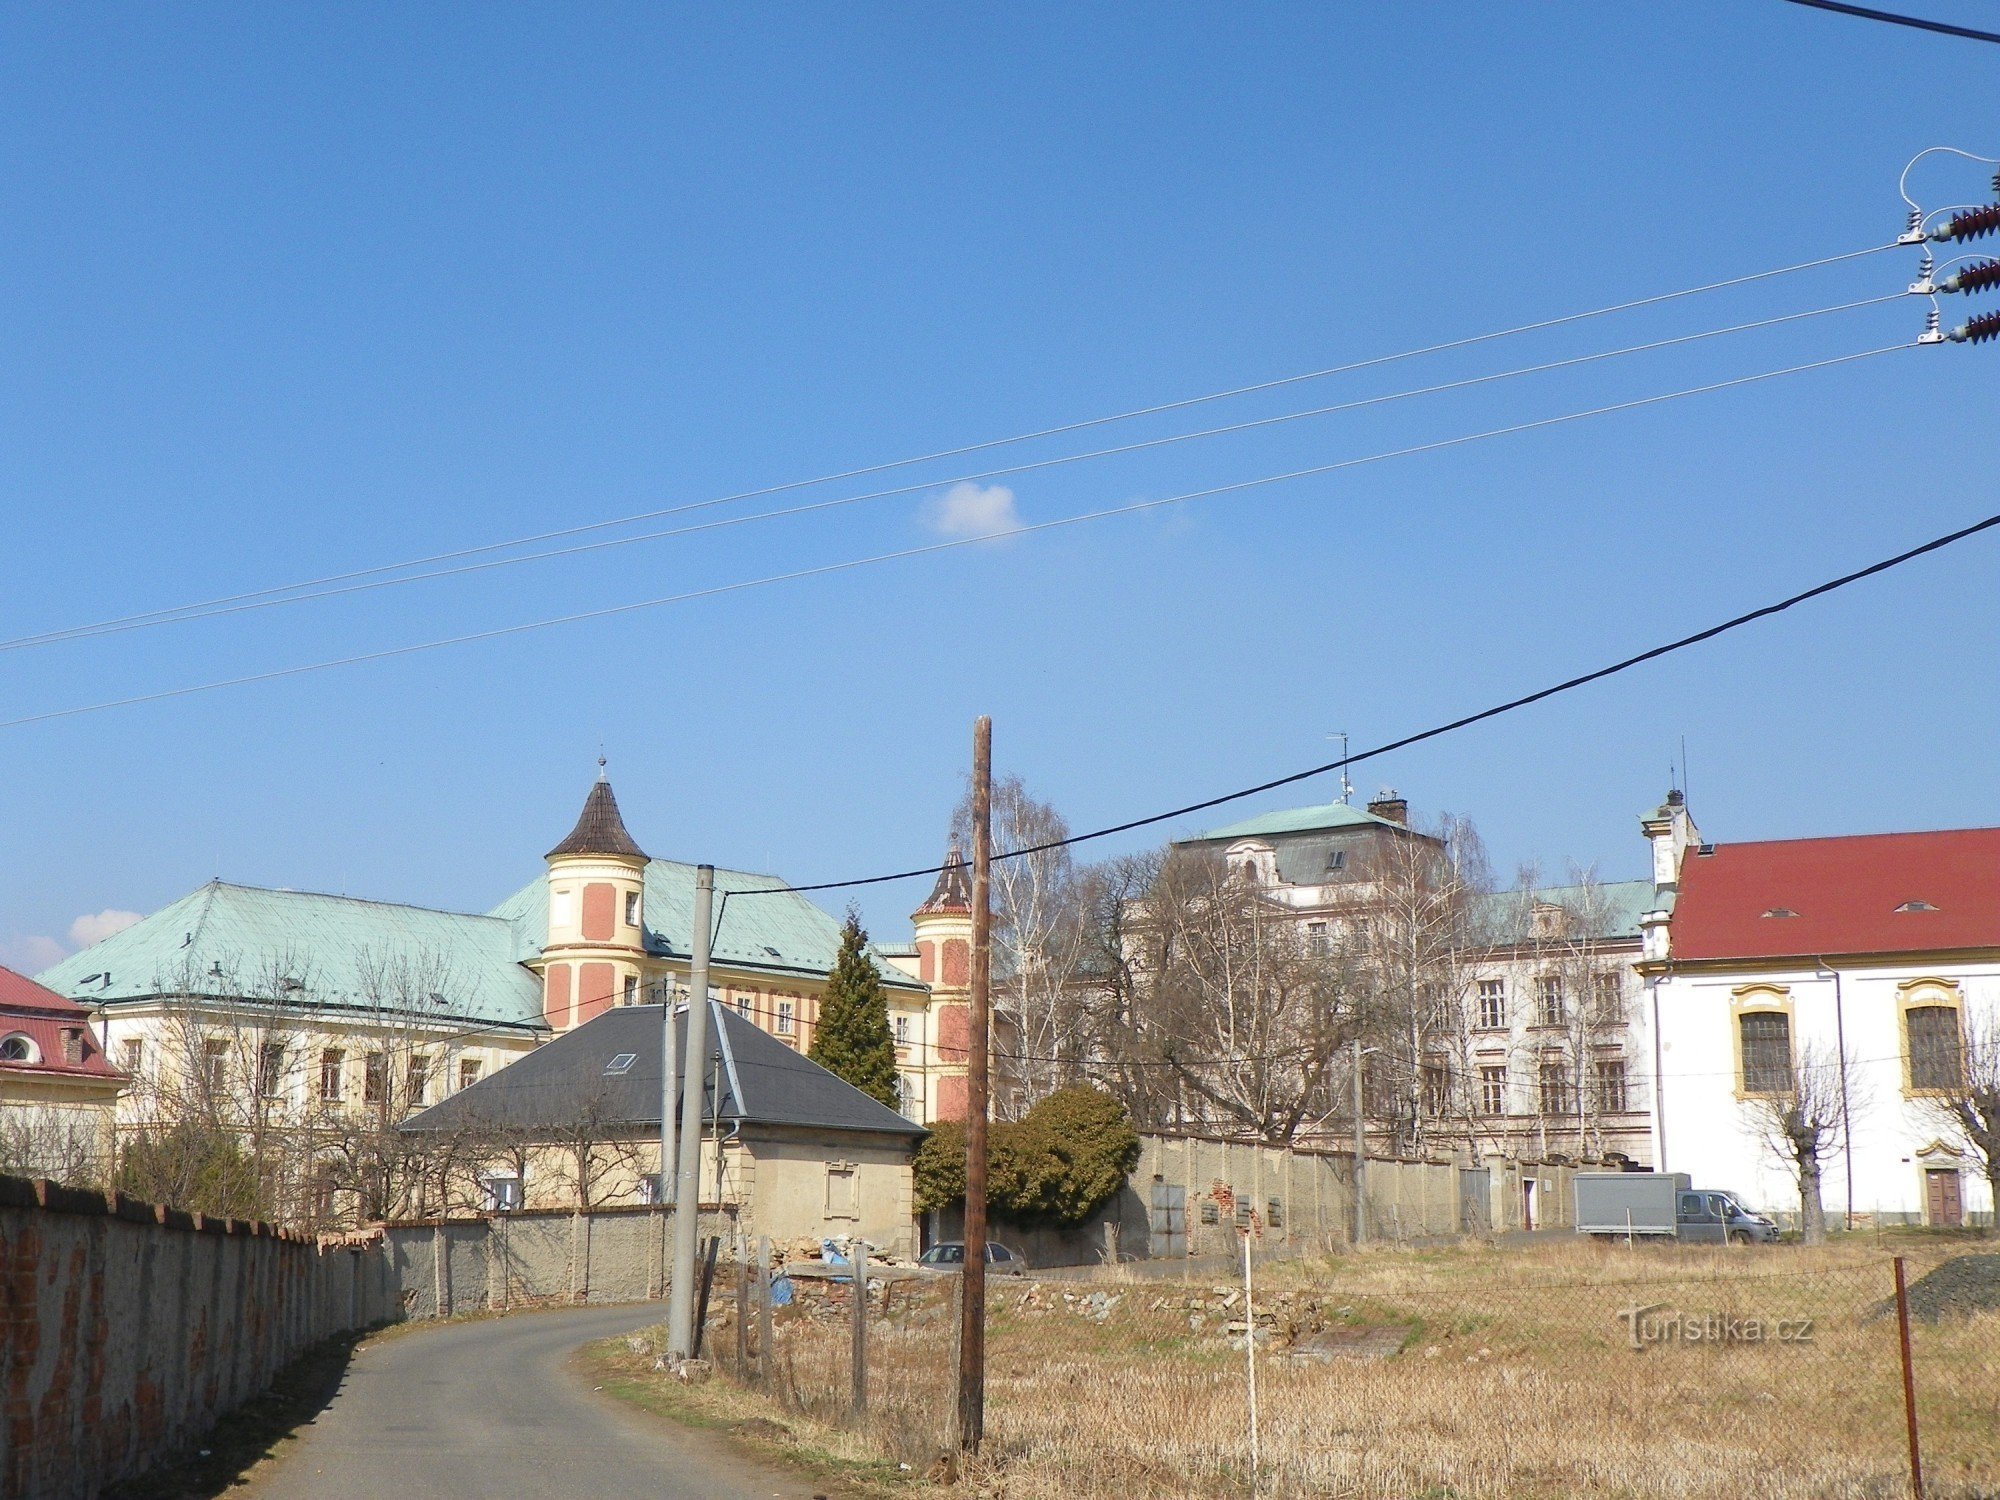 Kostolaty pod Milešovka (Sukoslav)